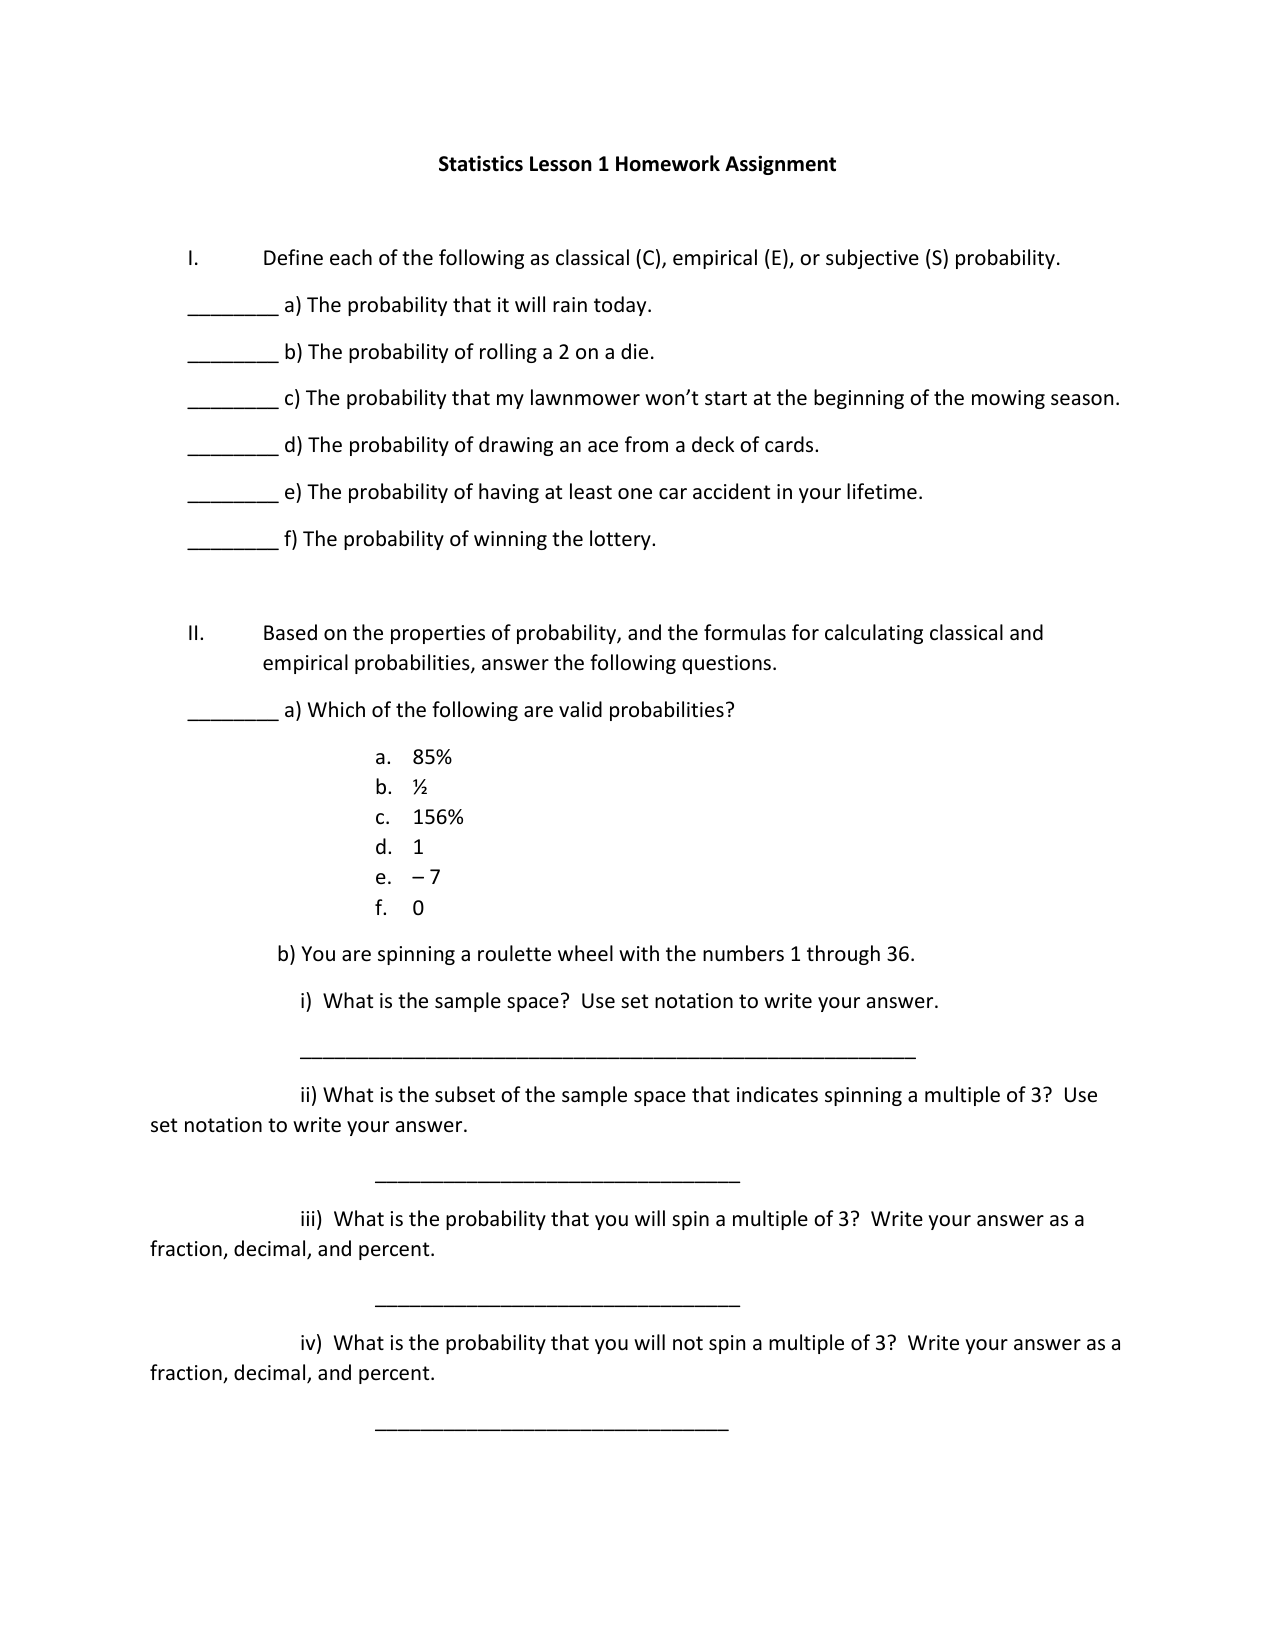 unit data and statistics homework 1 answer key